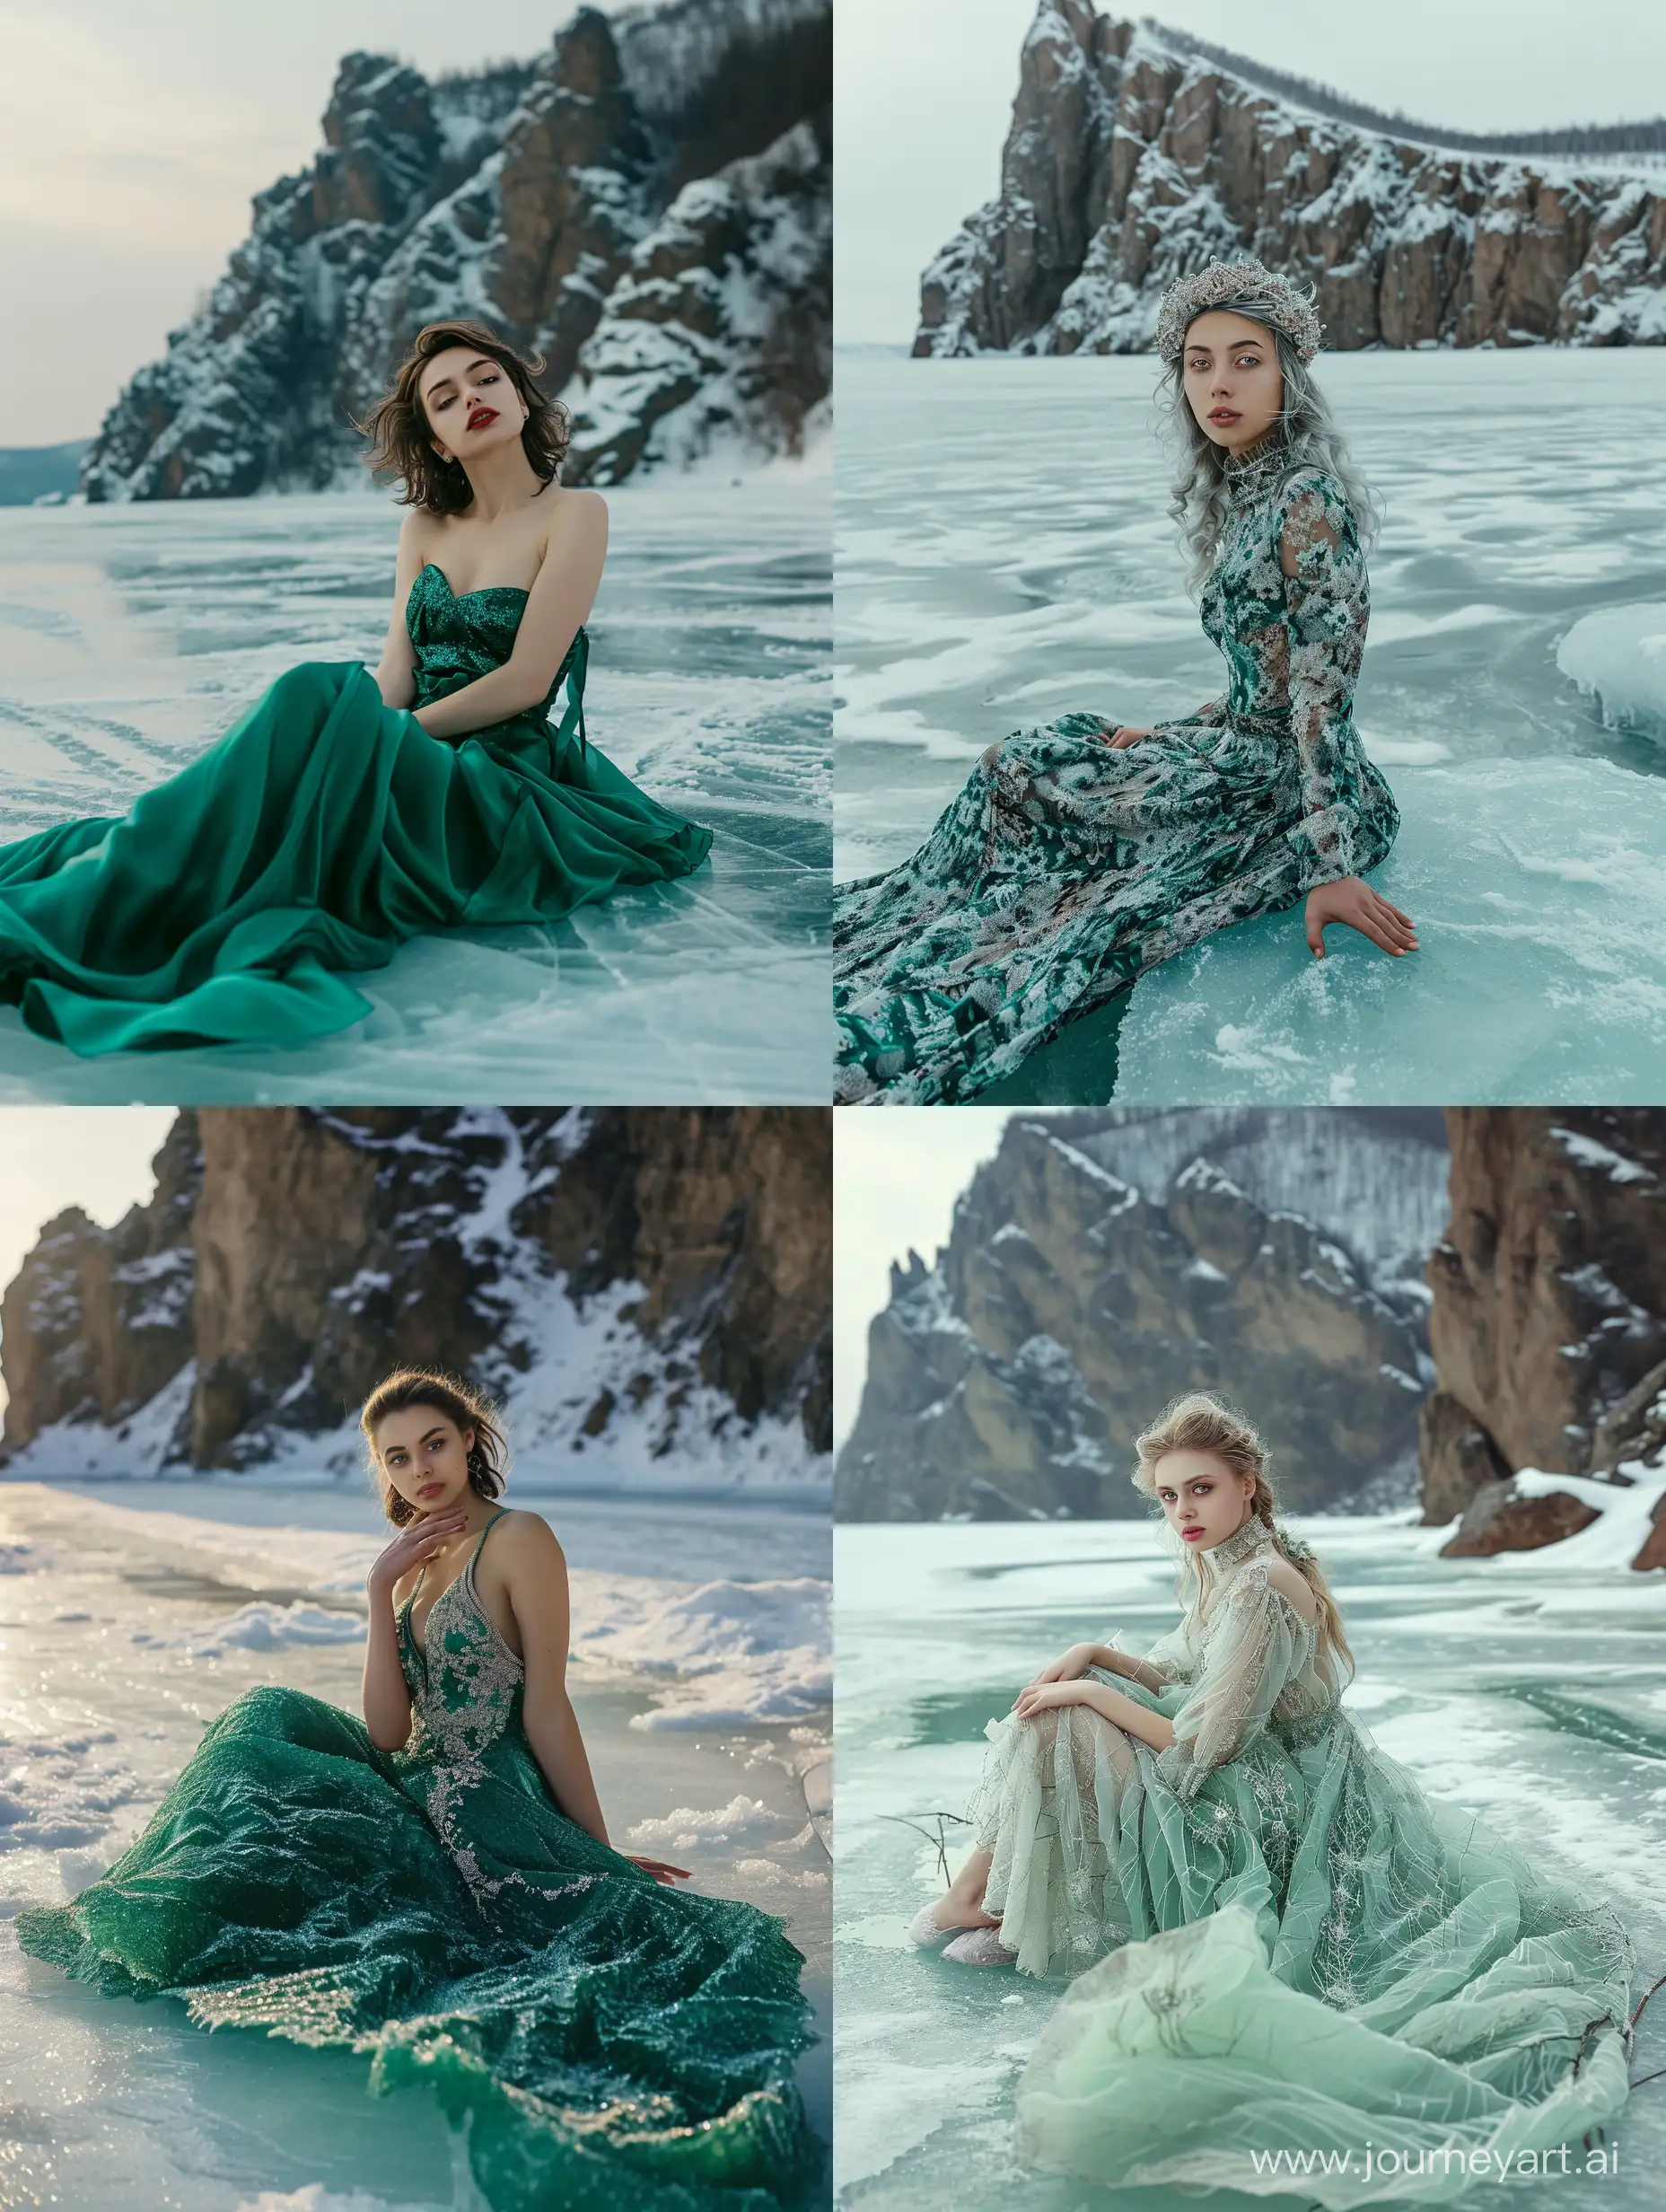 Enchanting-Winter-Portrait-Girl-in-Polymer-Dress-at-Lake-Baikal